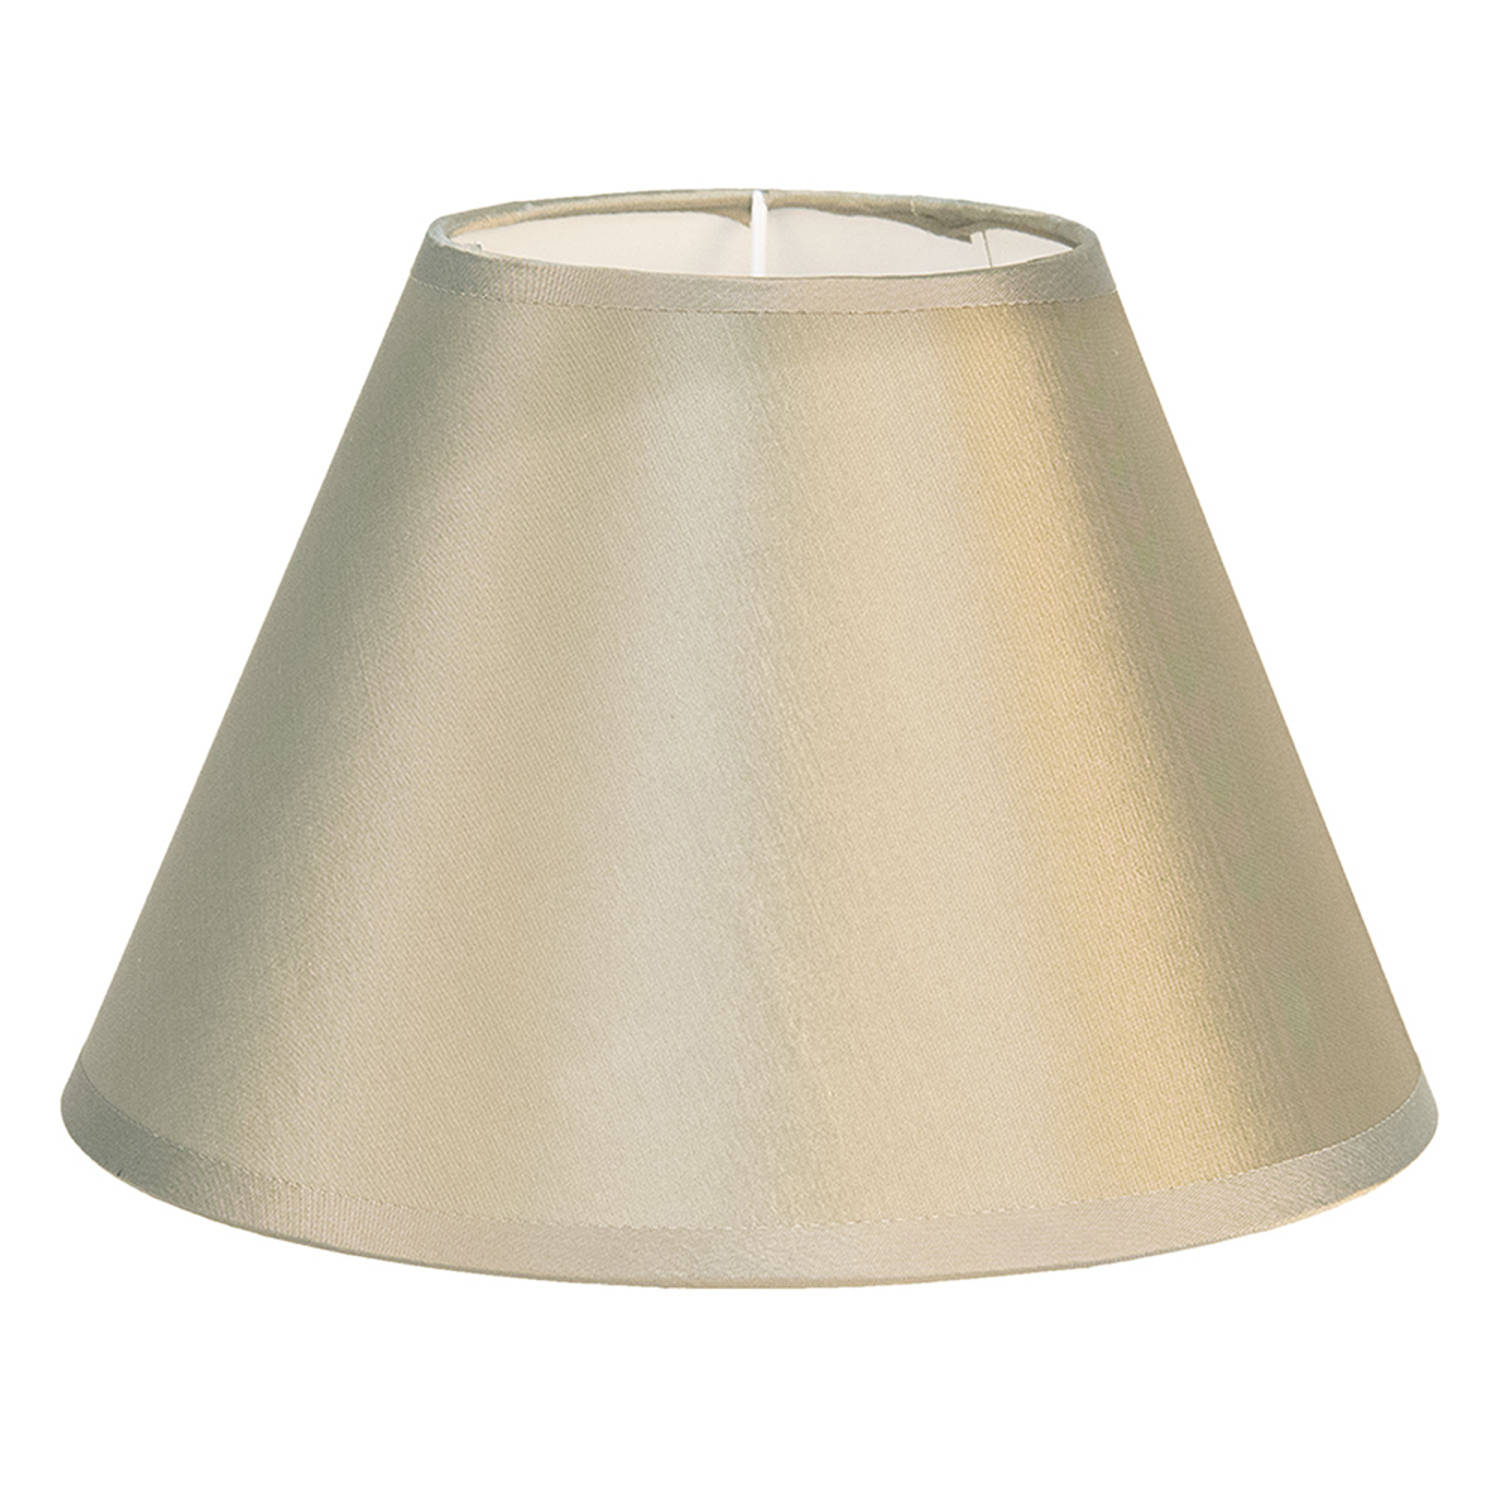 HAES DECO Lampenkap Modern Chic lichtgroen rond formaat Ø 37x20 cm, voor Fitting E27 Tafellamp, Hang